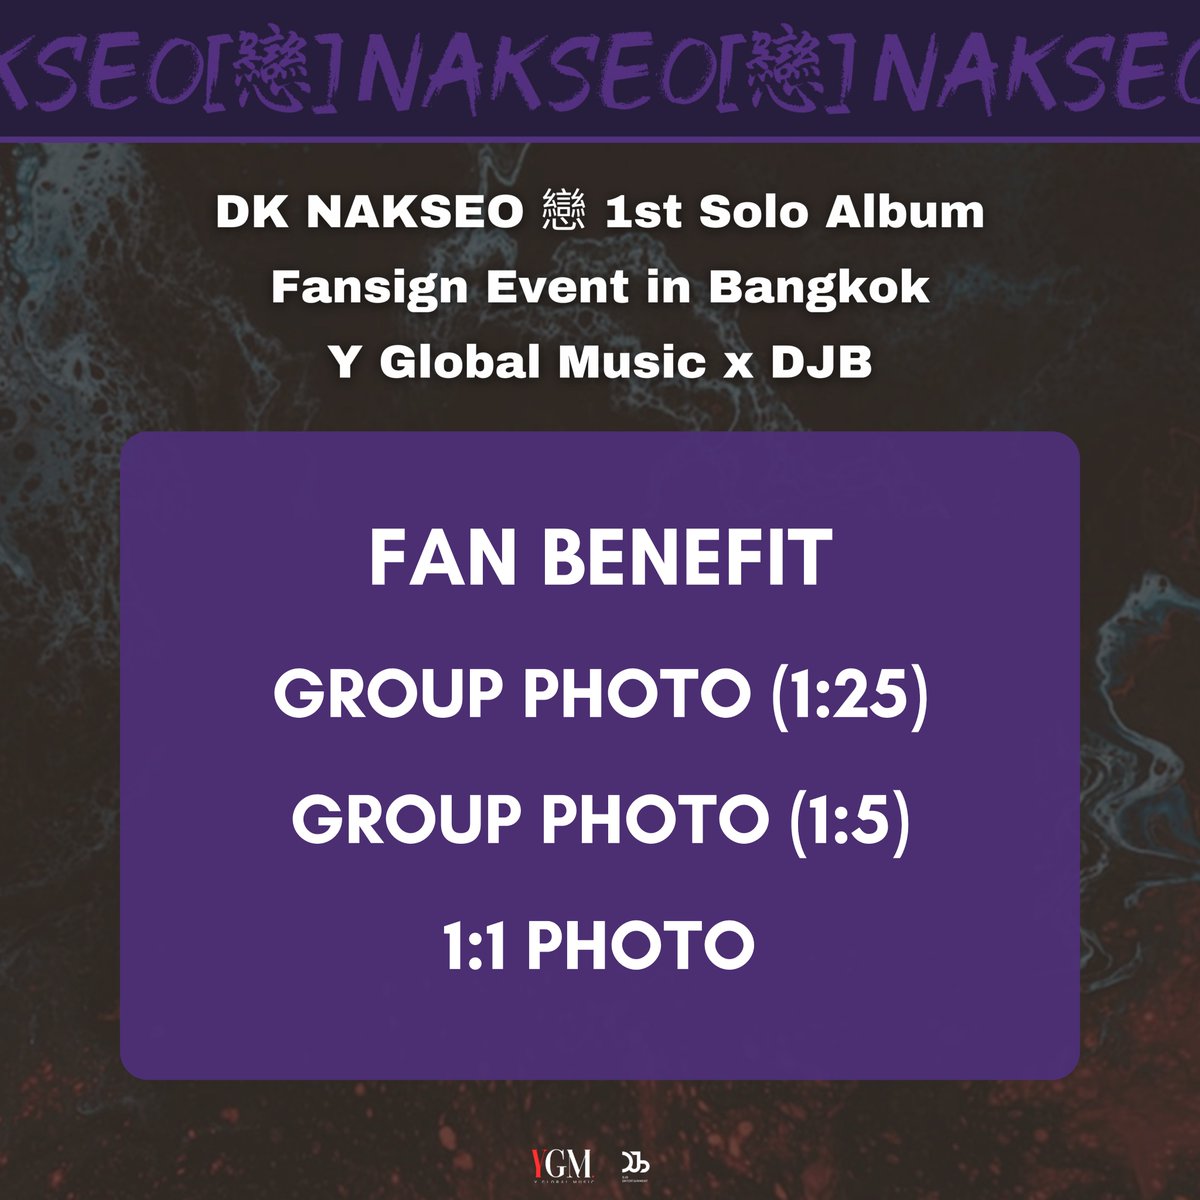 DK NAKSEO[戀] 1st Solo Album Fansign Event in Bangkok x Y Global Music ขอขอบคุณ #iKONIC ทุกท่านที่มาร่วมสร้างความทรงจำที่ดีร่วมกัน🦋 สามารถชมภาพทั้งหมดได้ที่ 📷 drive.google.com/drive/folders/… #DK_NAKSEO_FansigninBKK #DK #DONGHYUK